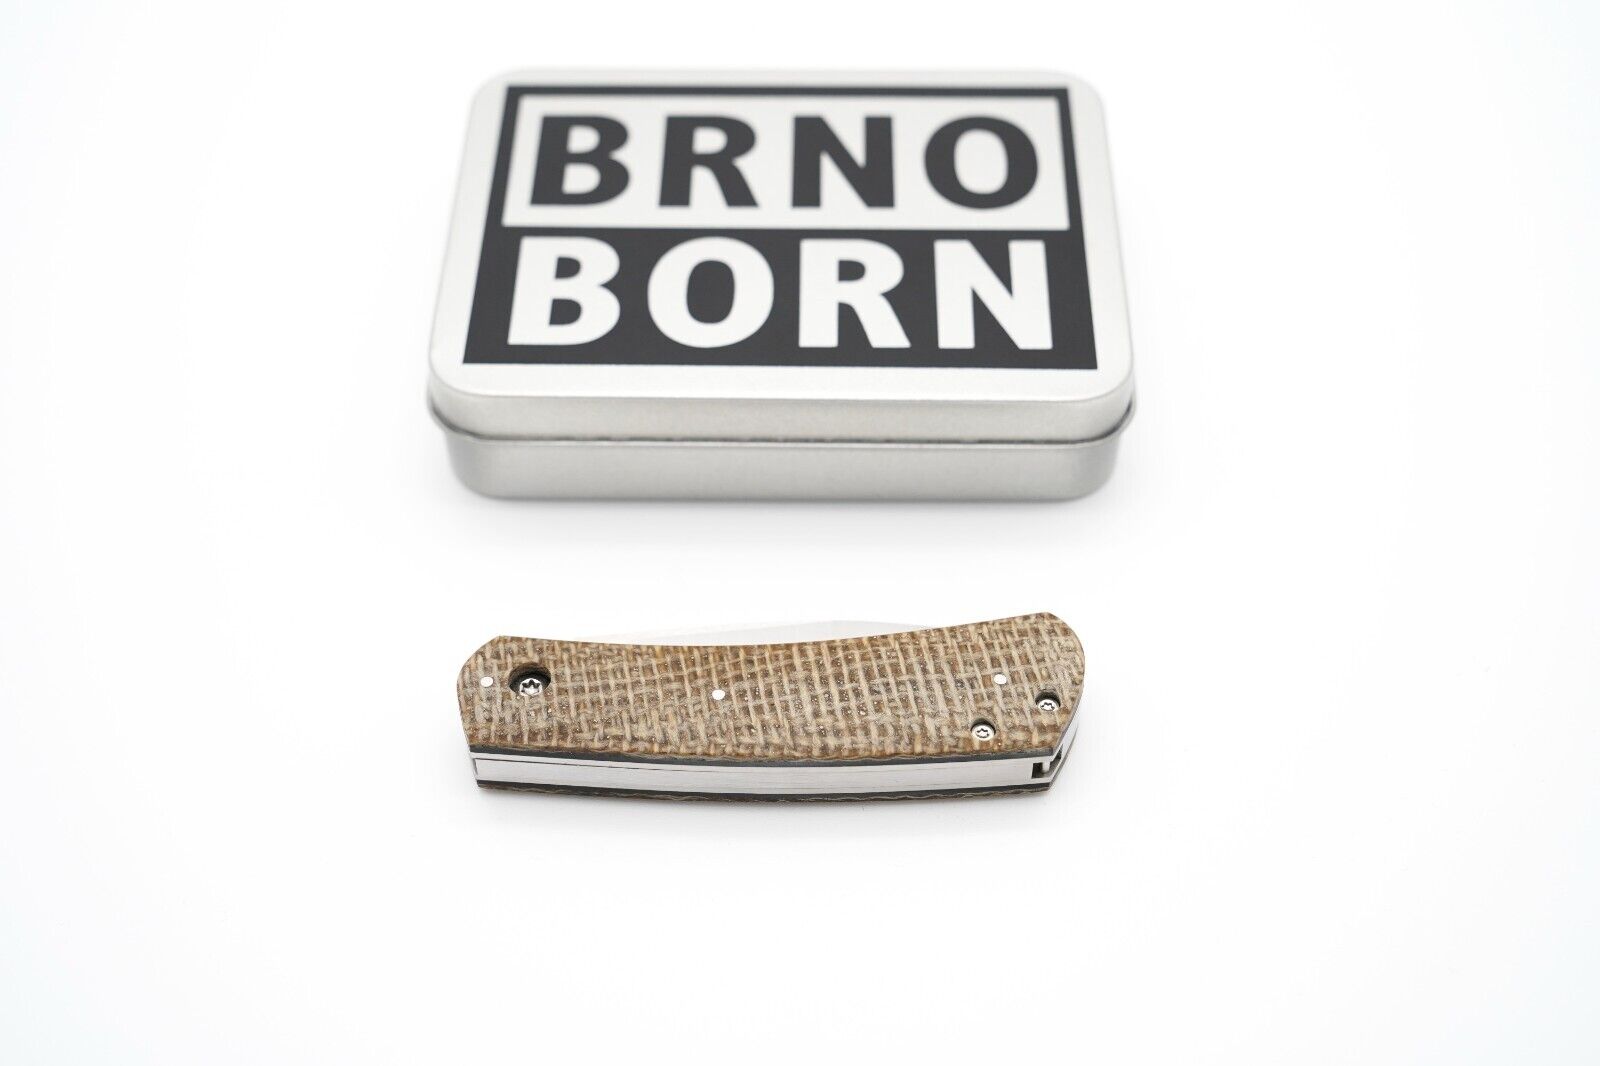 BRNO Born Boston Slip joint Urban EDC Excl., D2 steel, Burlap Micarta Scales